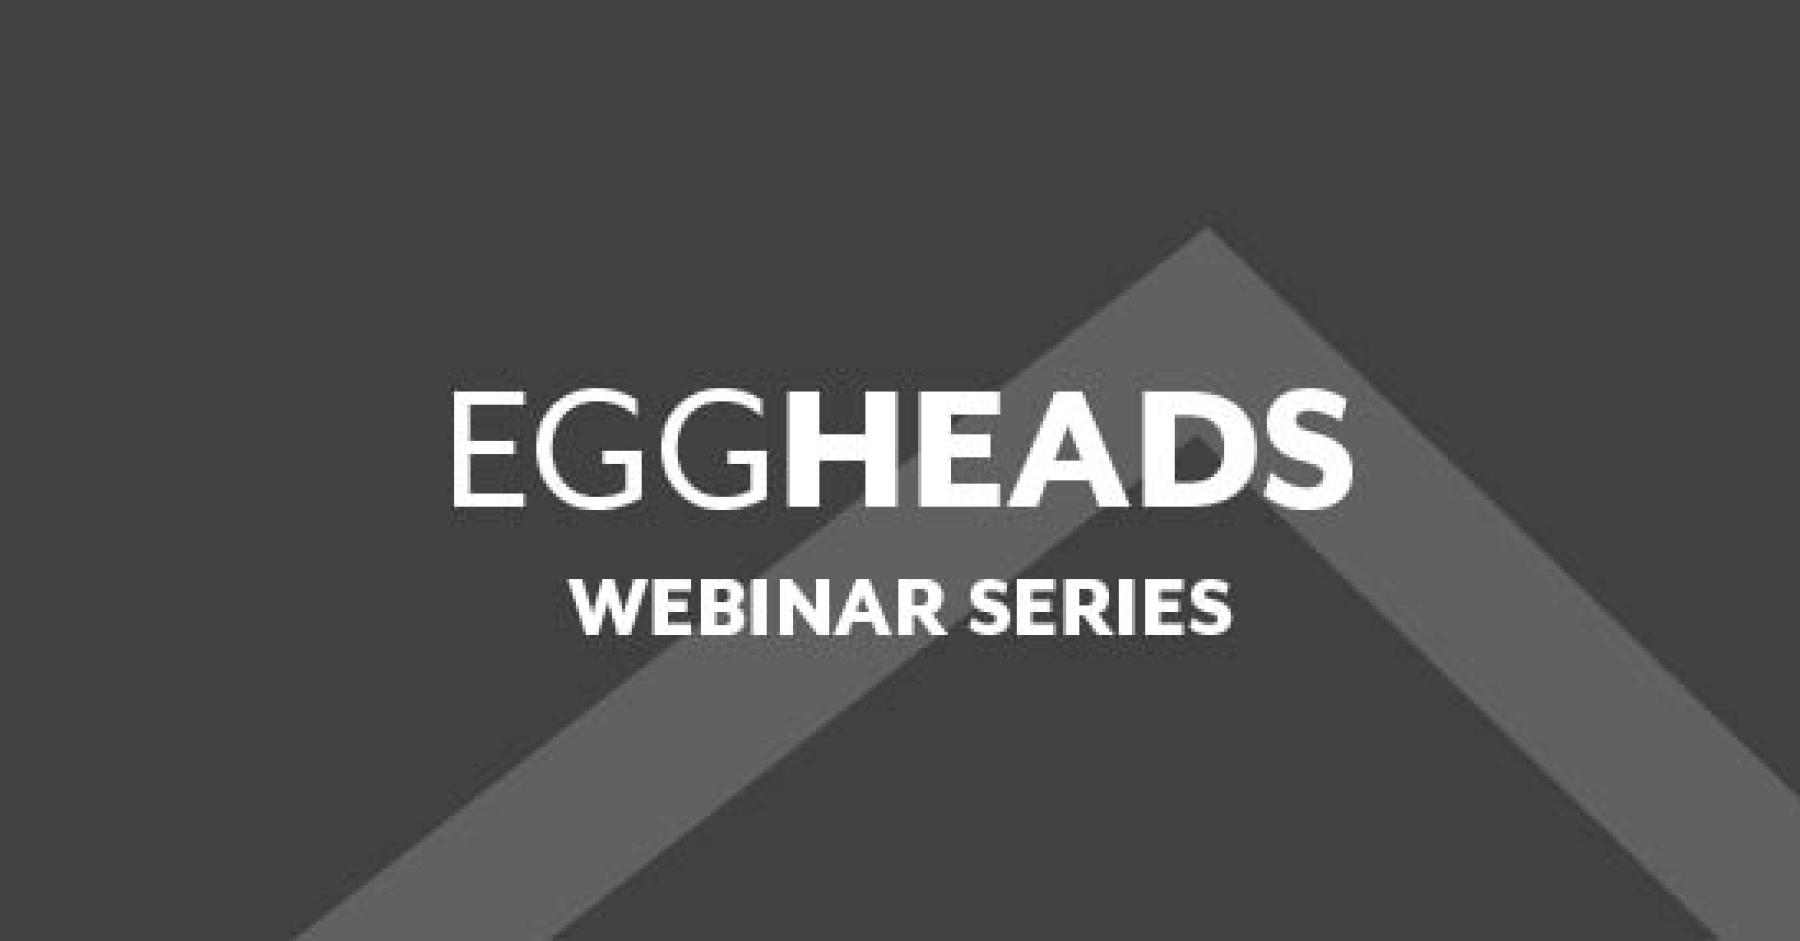 Eggheads Webinar Series